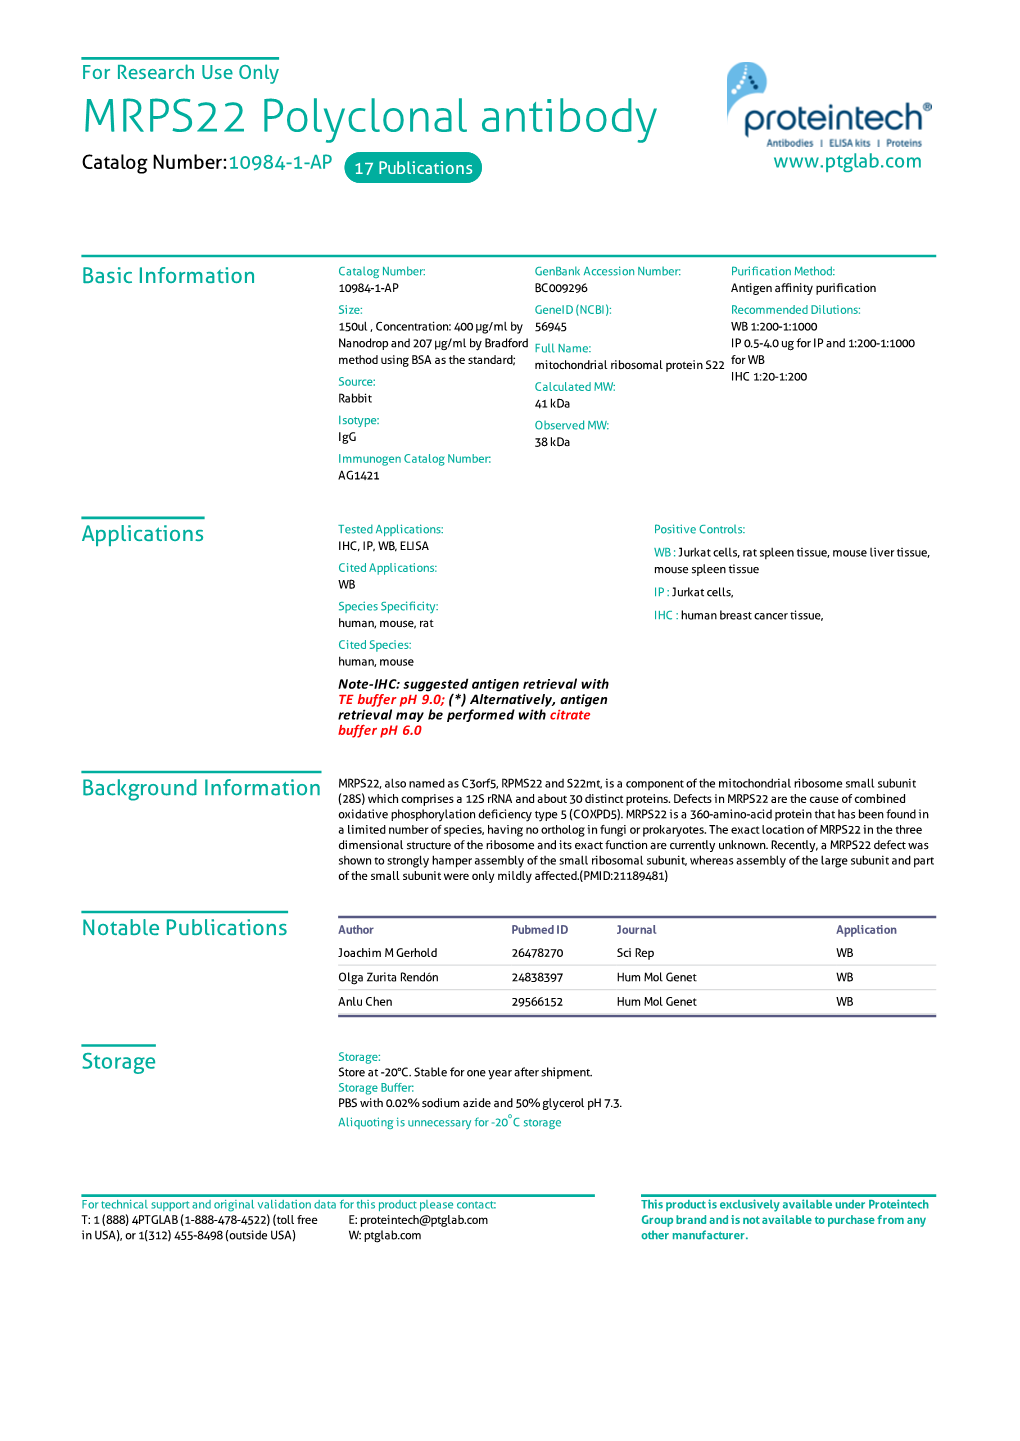 MRPS22 Polyclonal Antibody Catalog Number:10984-1-AP 17 Publications